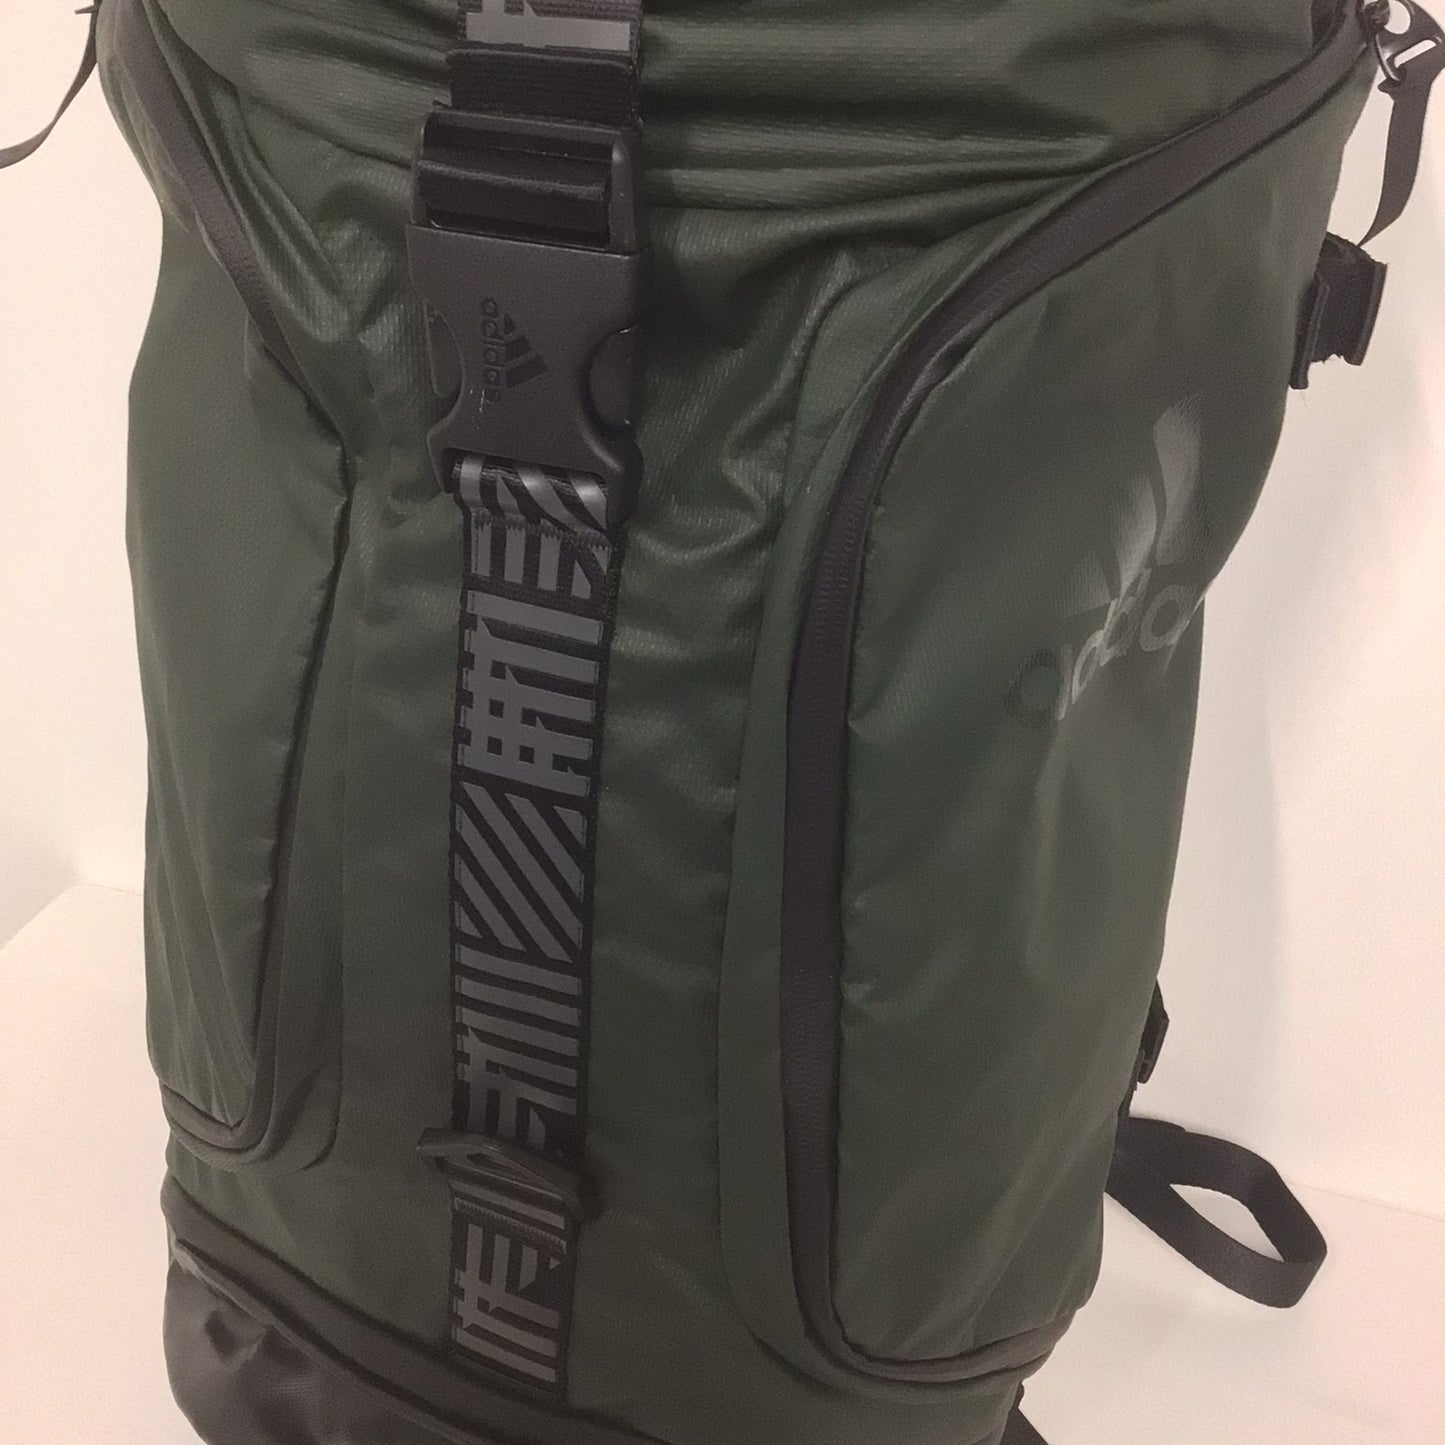 Adidas U7 ClimaCool Khaki Green Hockey Backpack w/Laptop Compartment